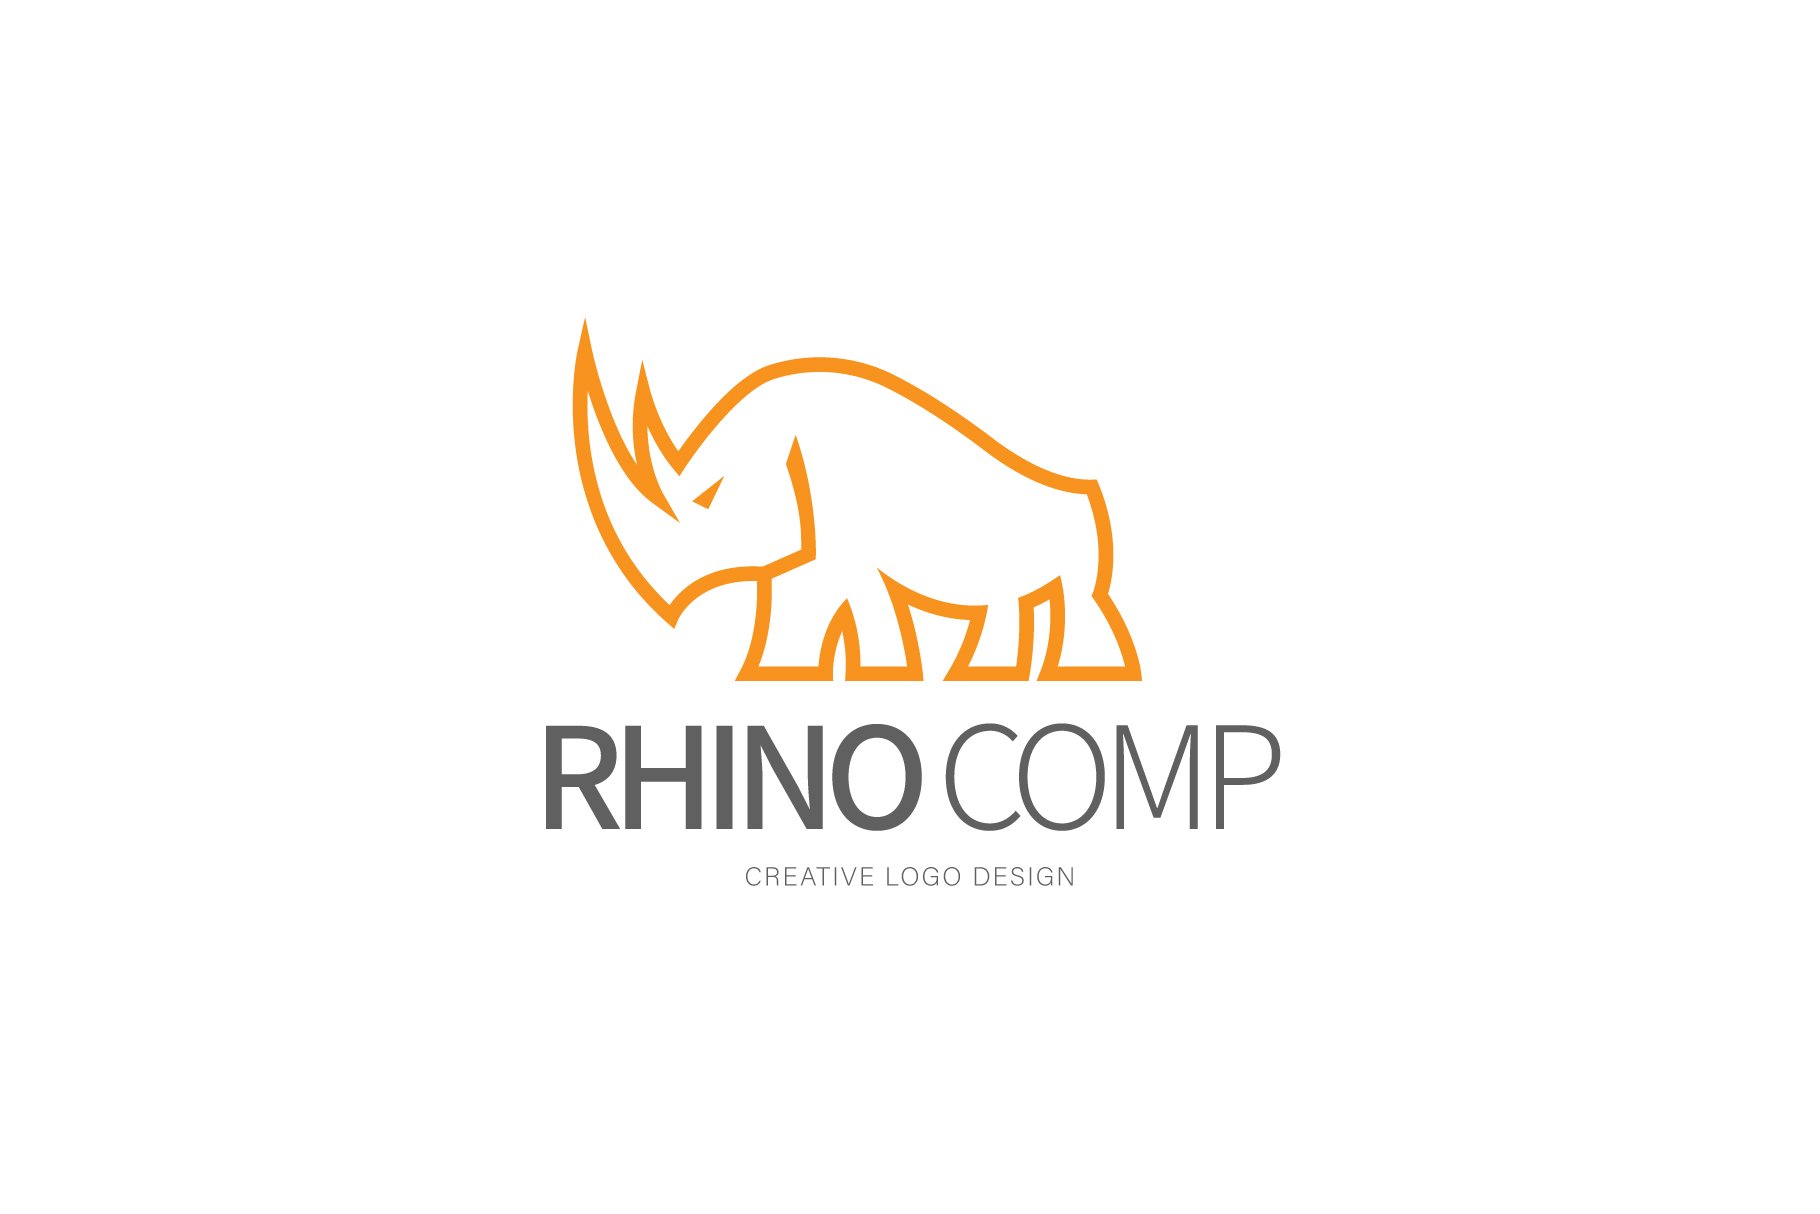 White matte background with the orange outline rhino.